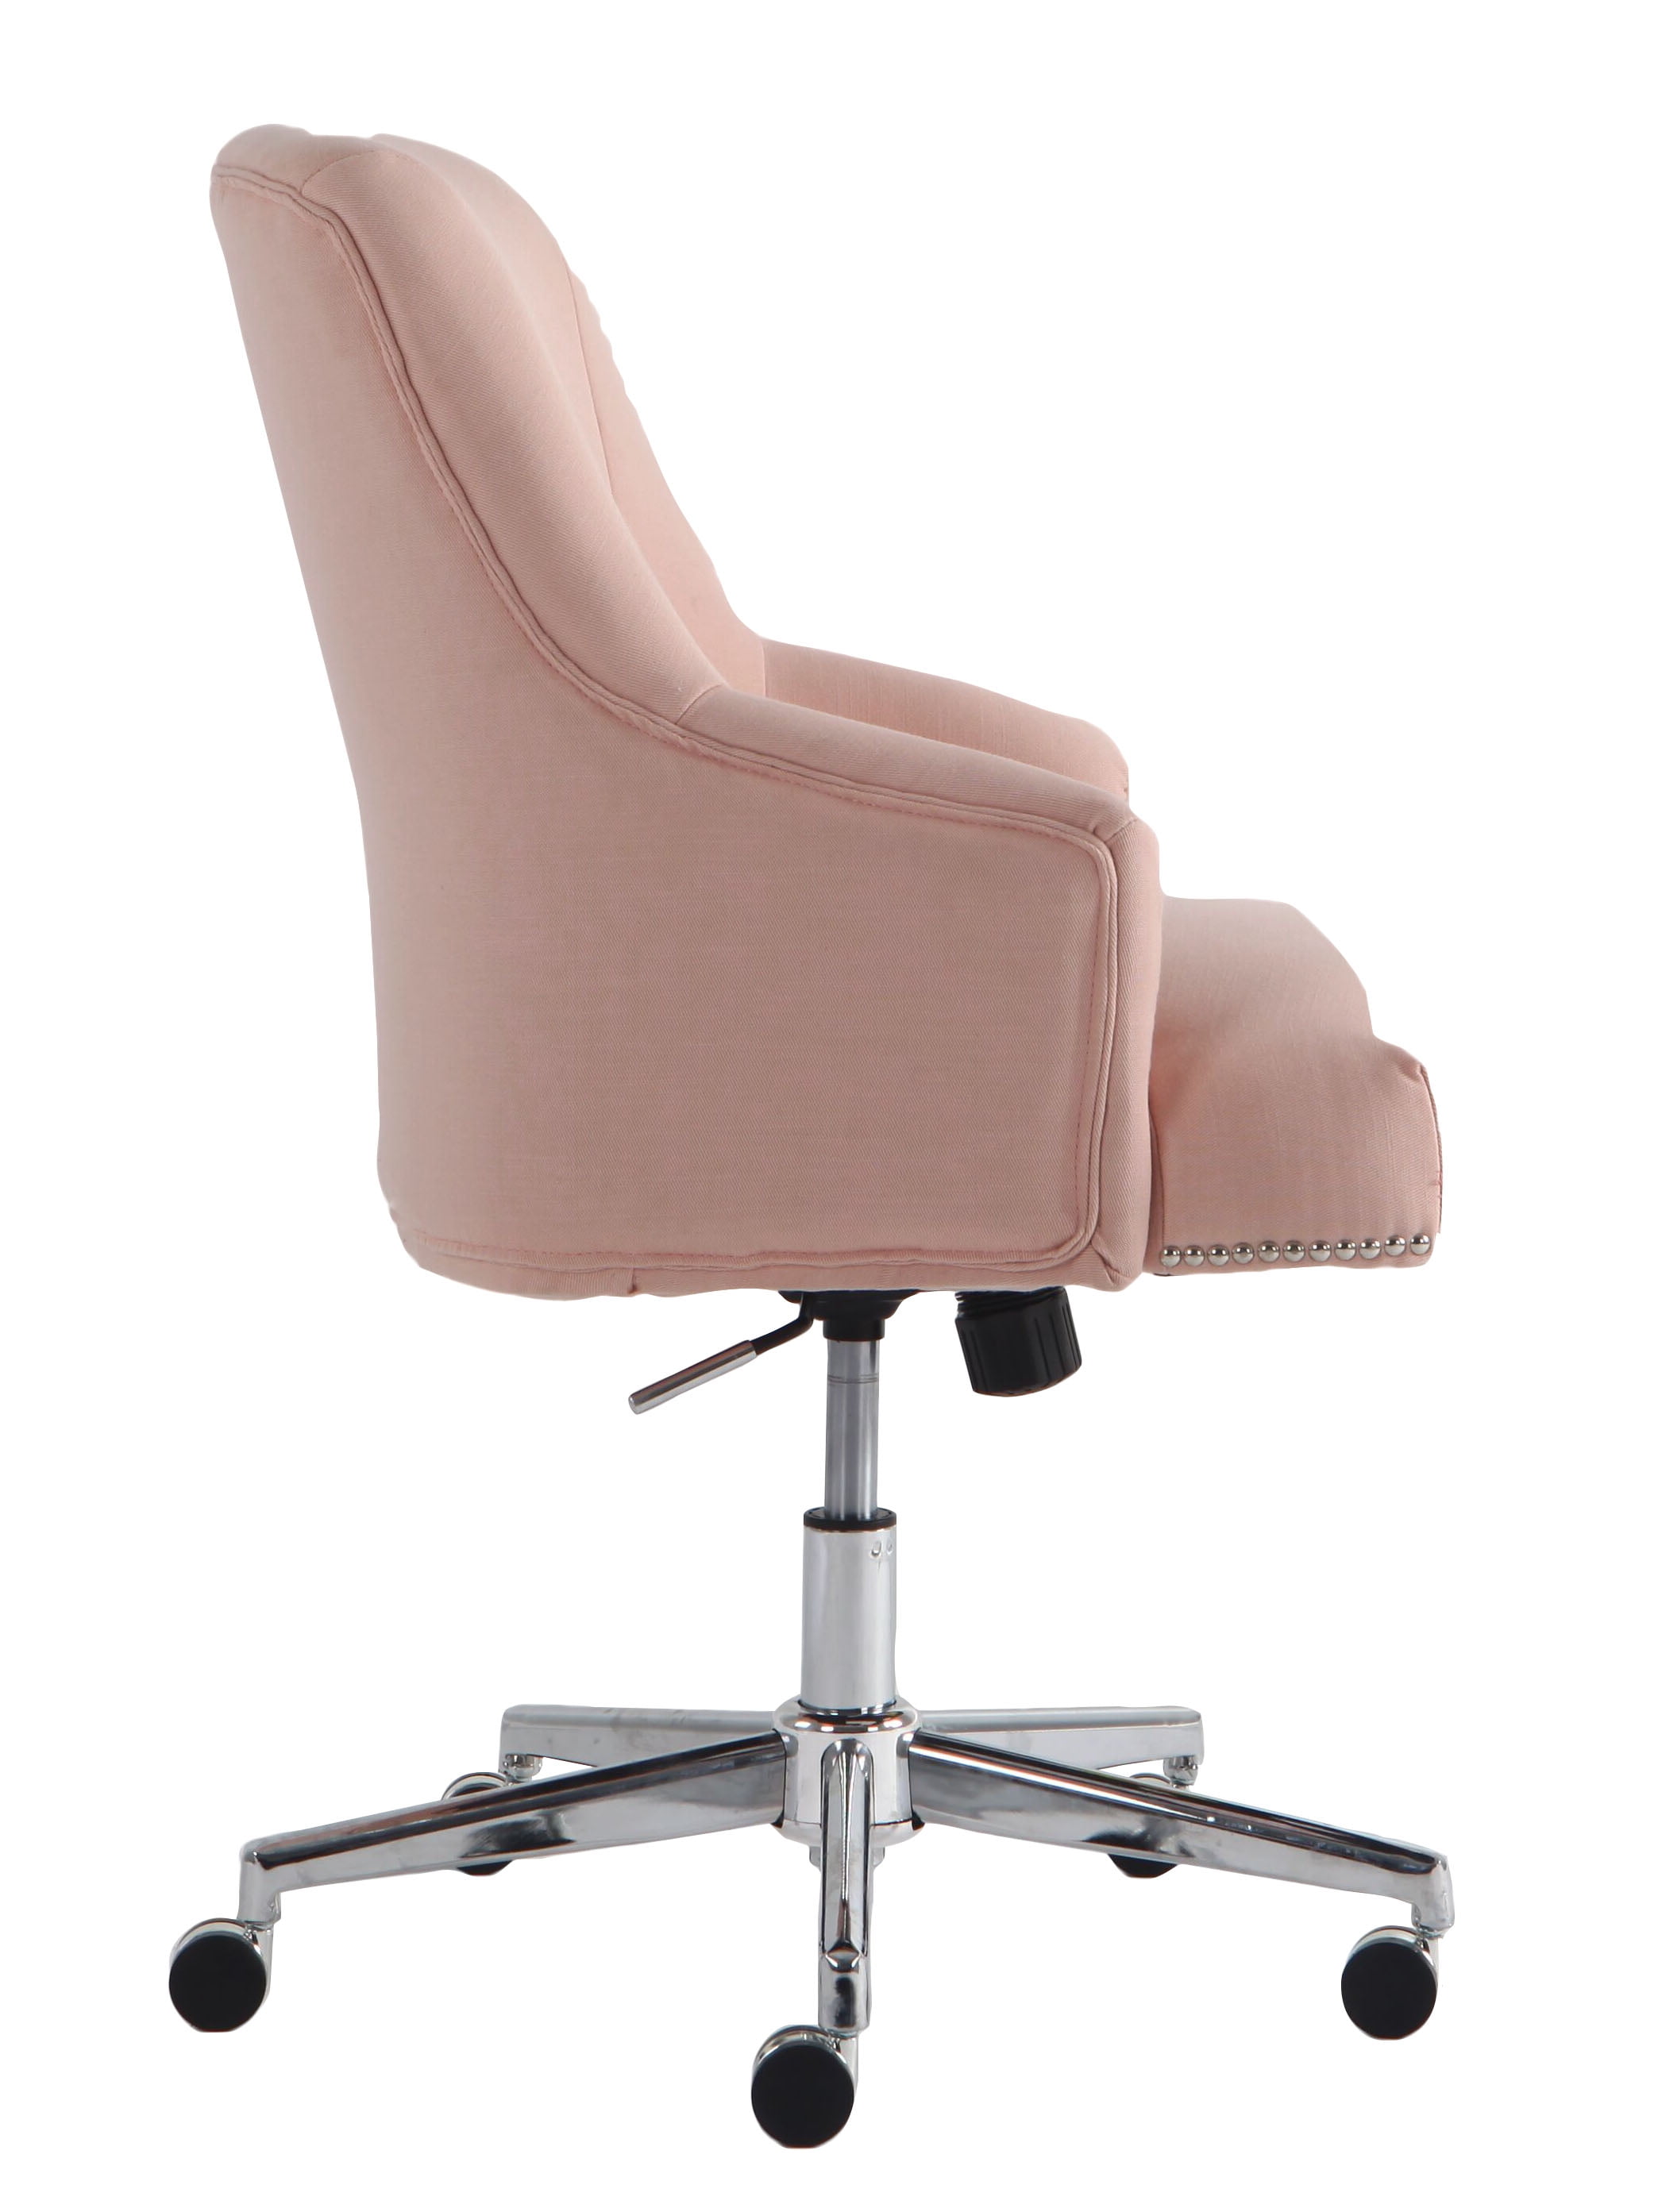 serta style leighton home office chair blush pink twill fabric